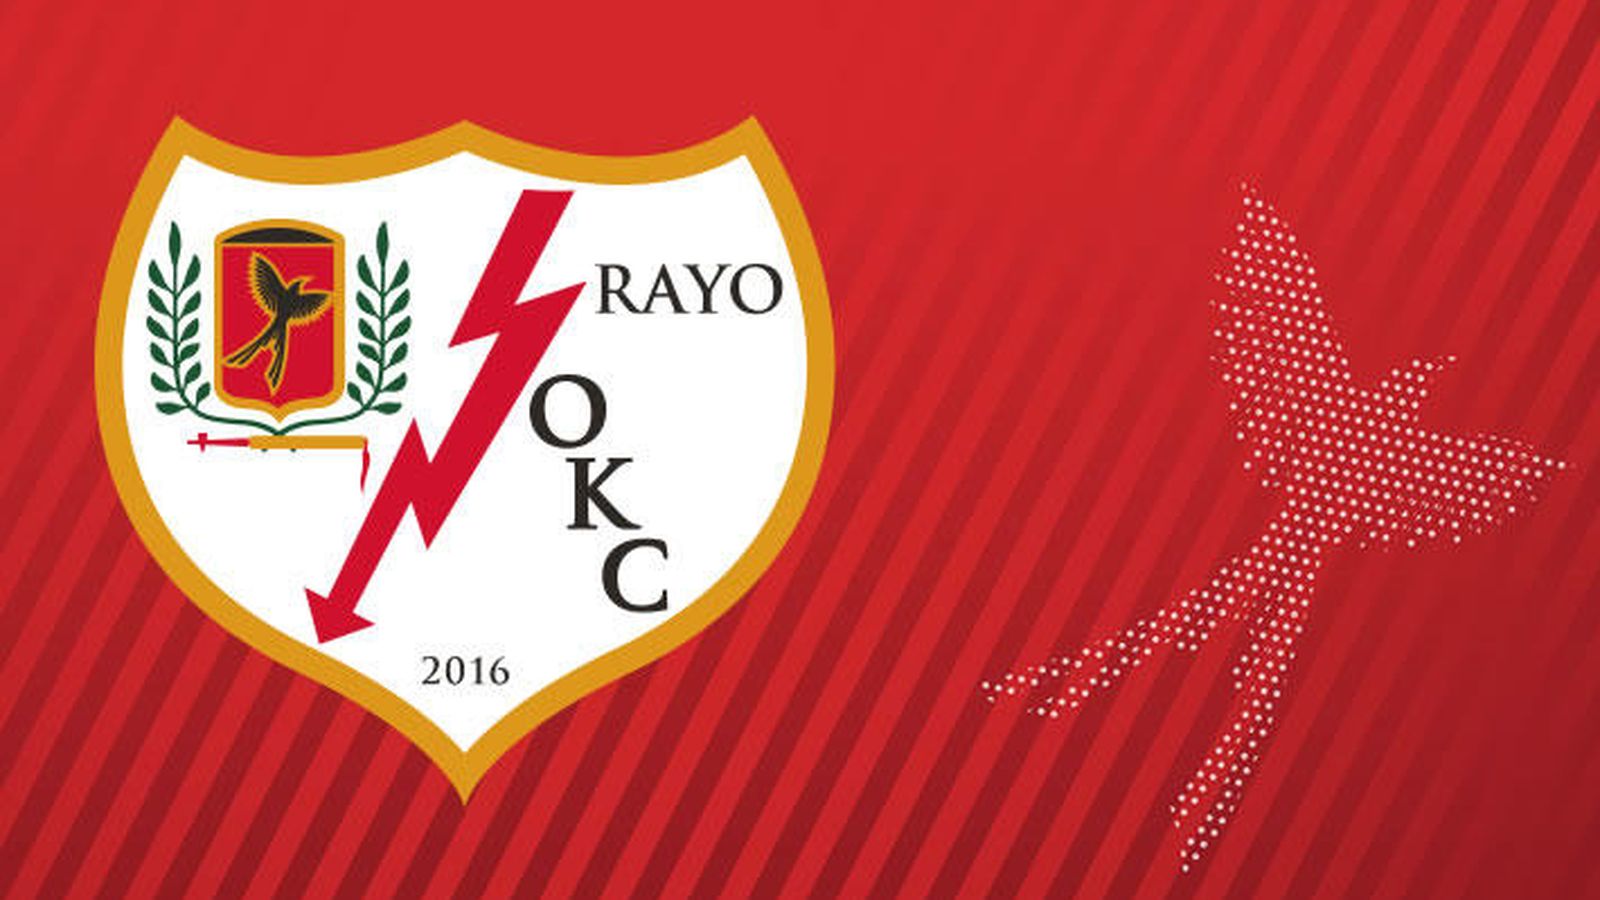 rayo vallecano club logo símbolo la liga España fútbol americano